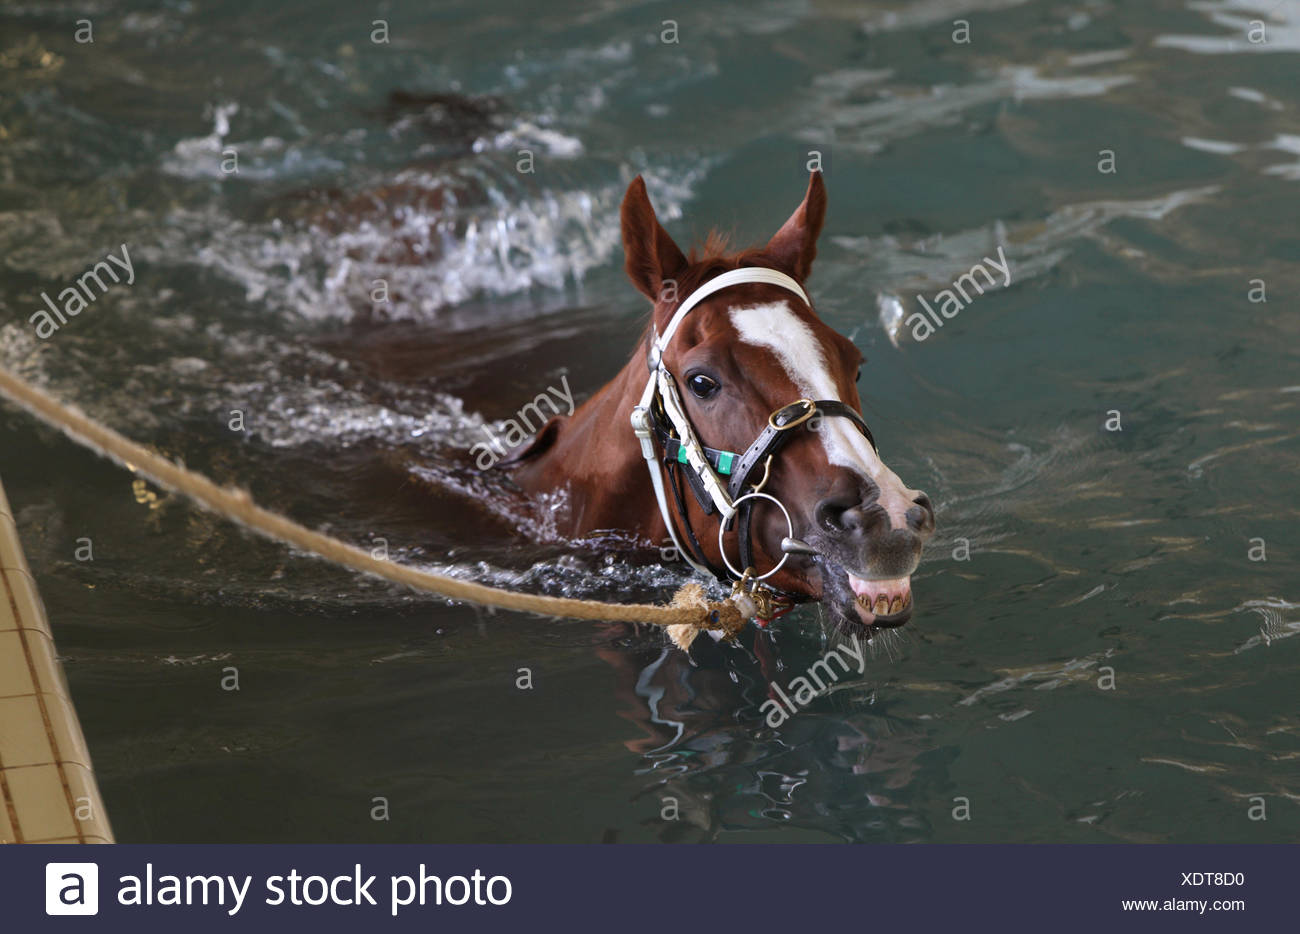 Horse Training In Pool Stock Photos &amp; Horse Training In ...